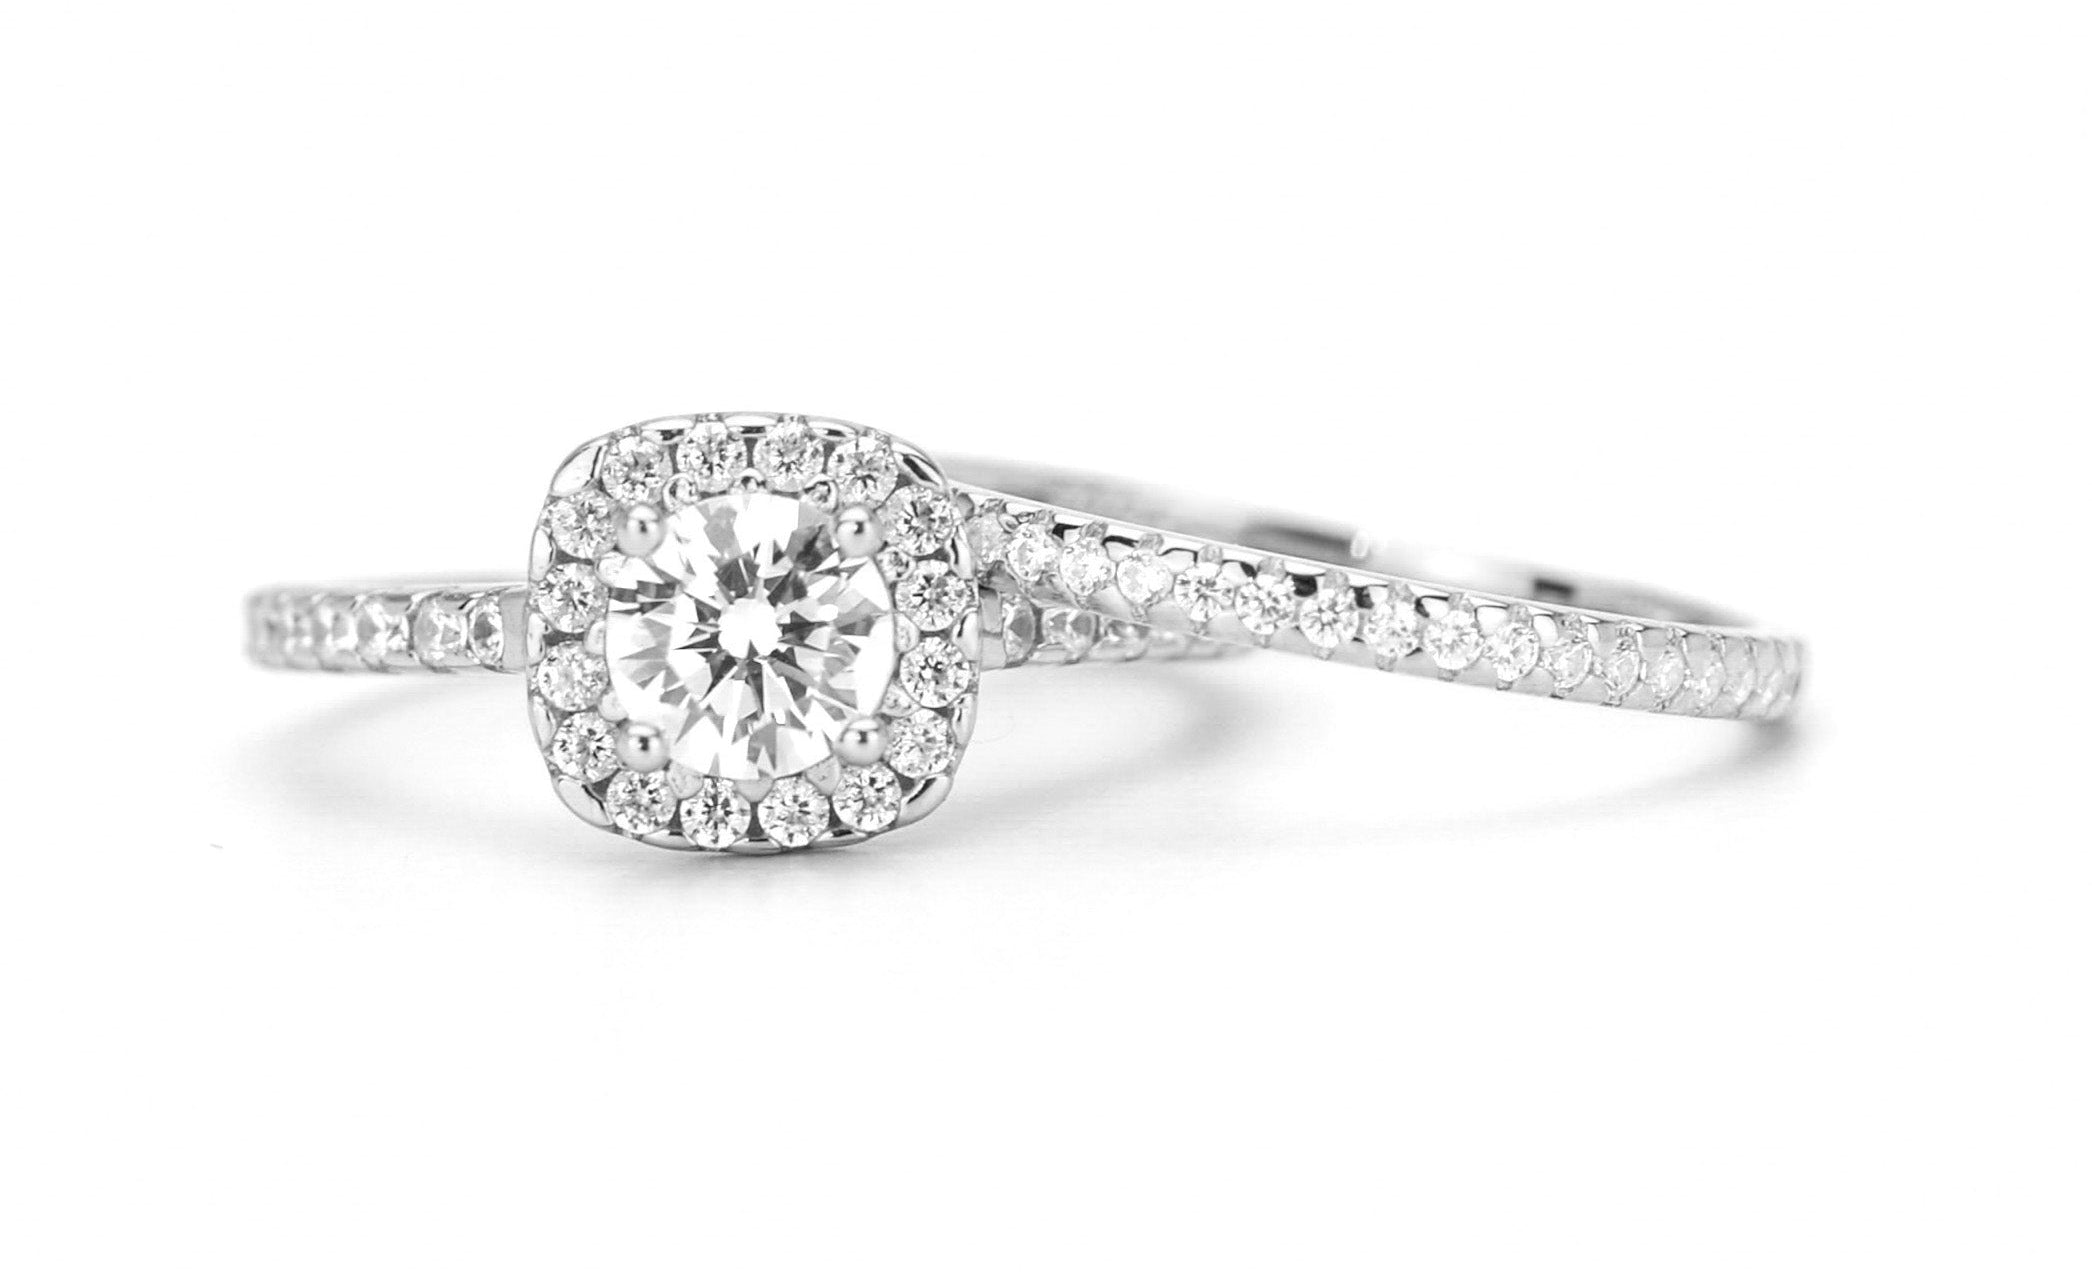 Ringset, Verlovingsring, trouwring, Halo ring, Zilveren ring, Gouden ringset, Solitaire ring, vriendschapsring, promise ring